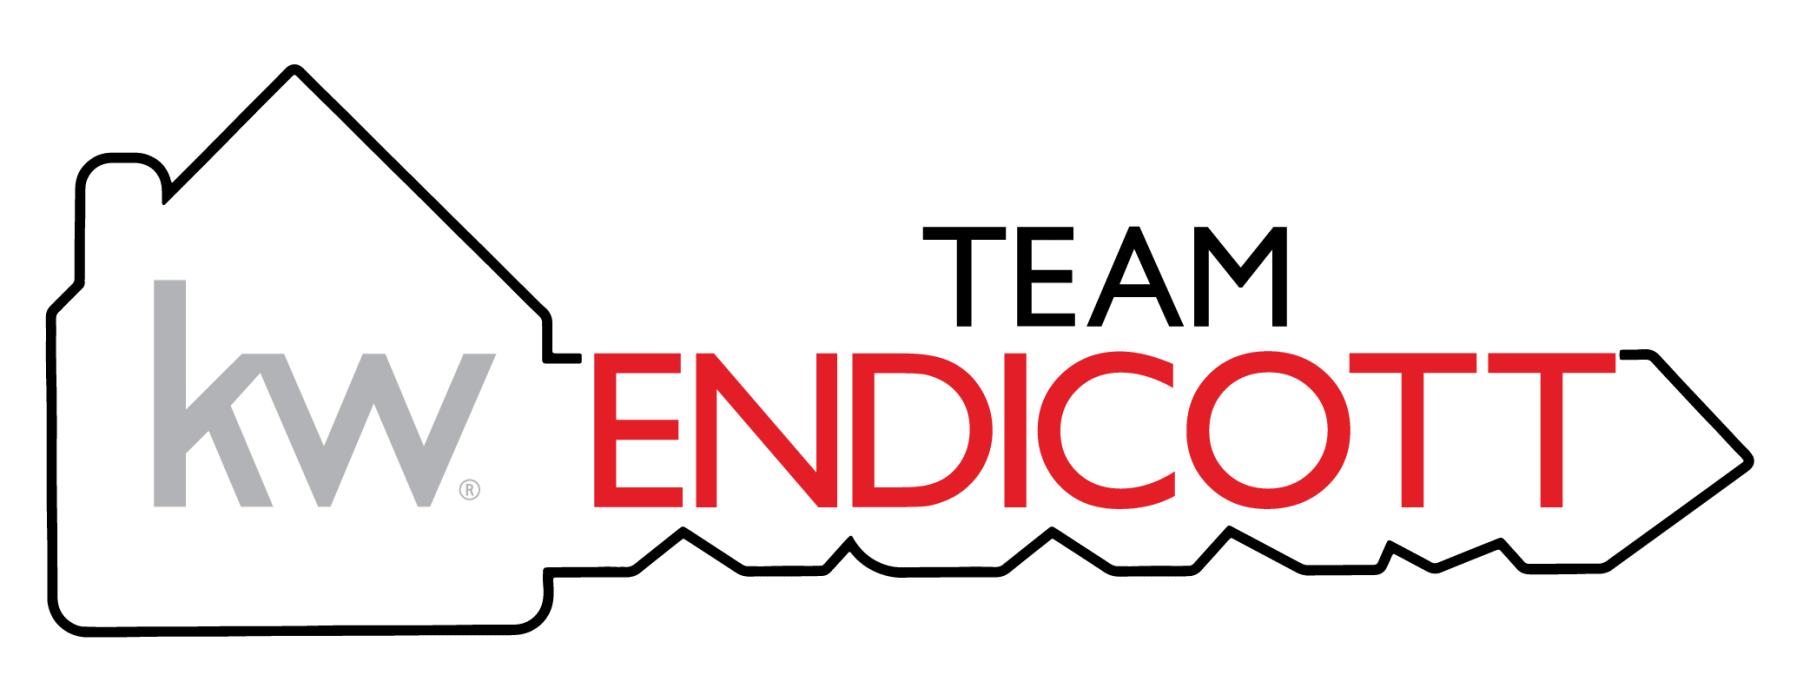 TeamEndicott Logo